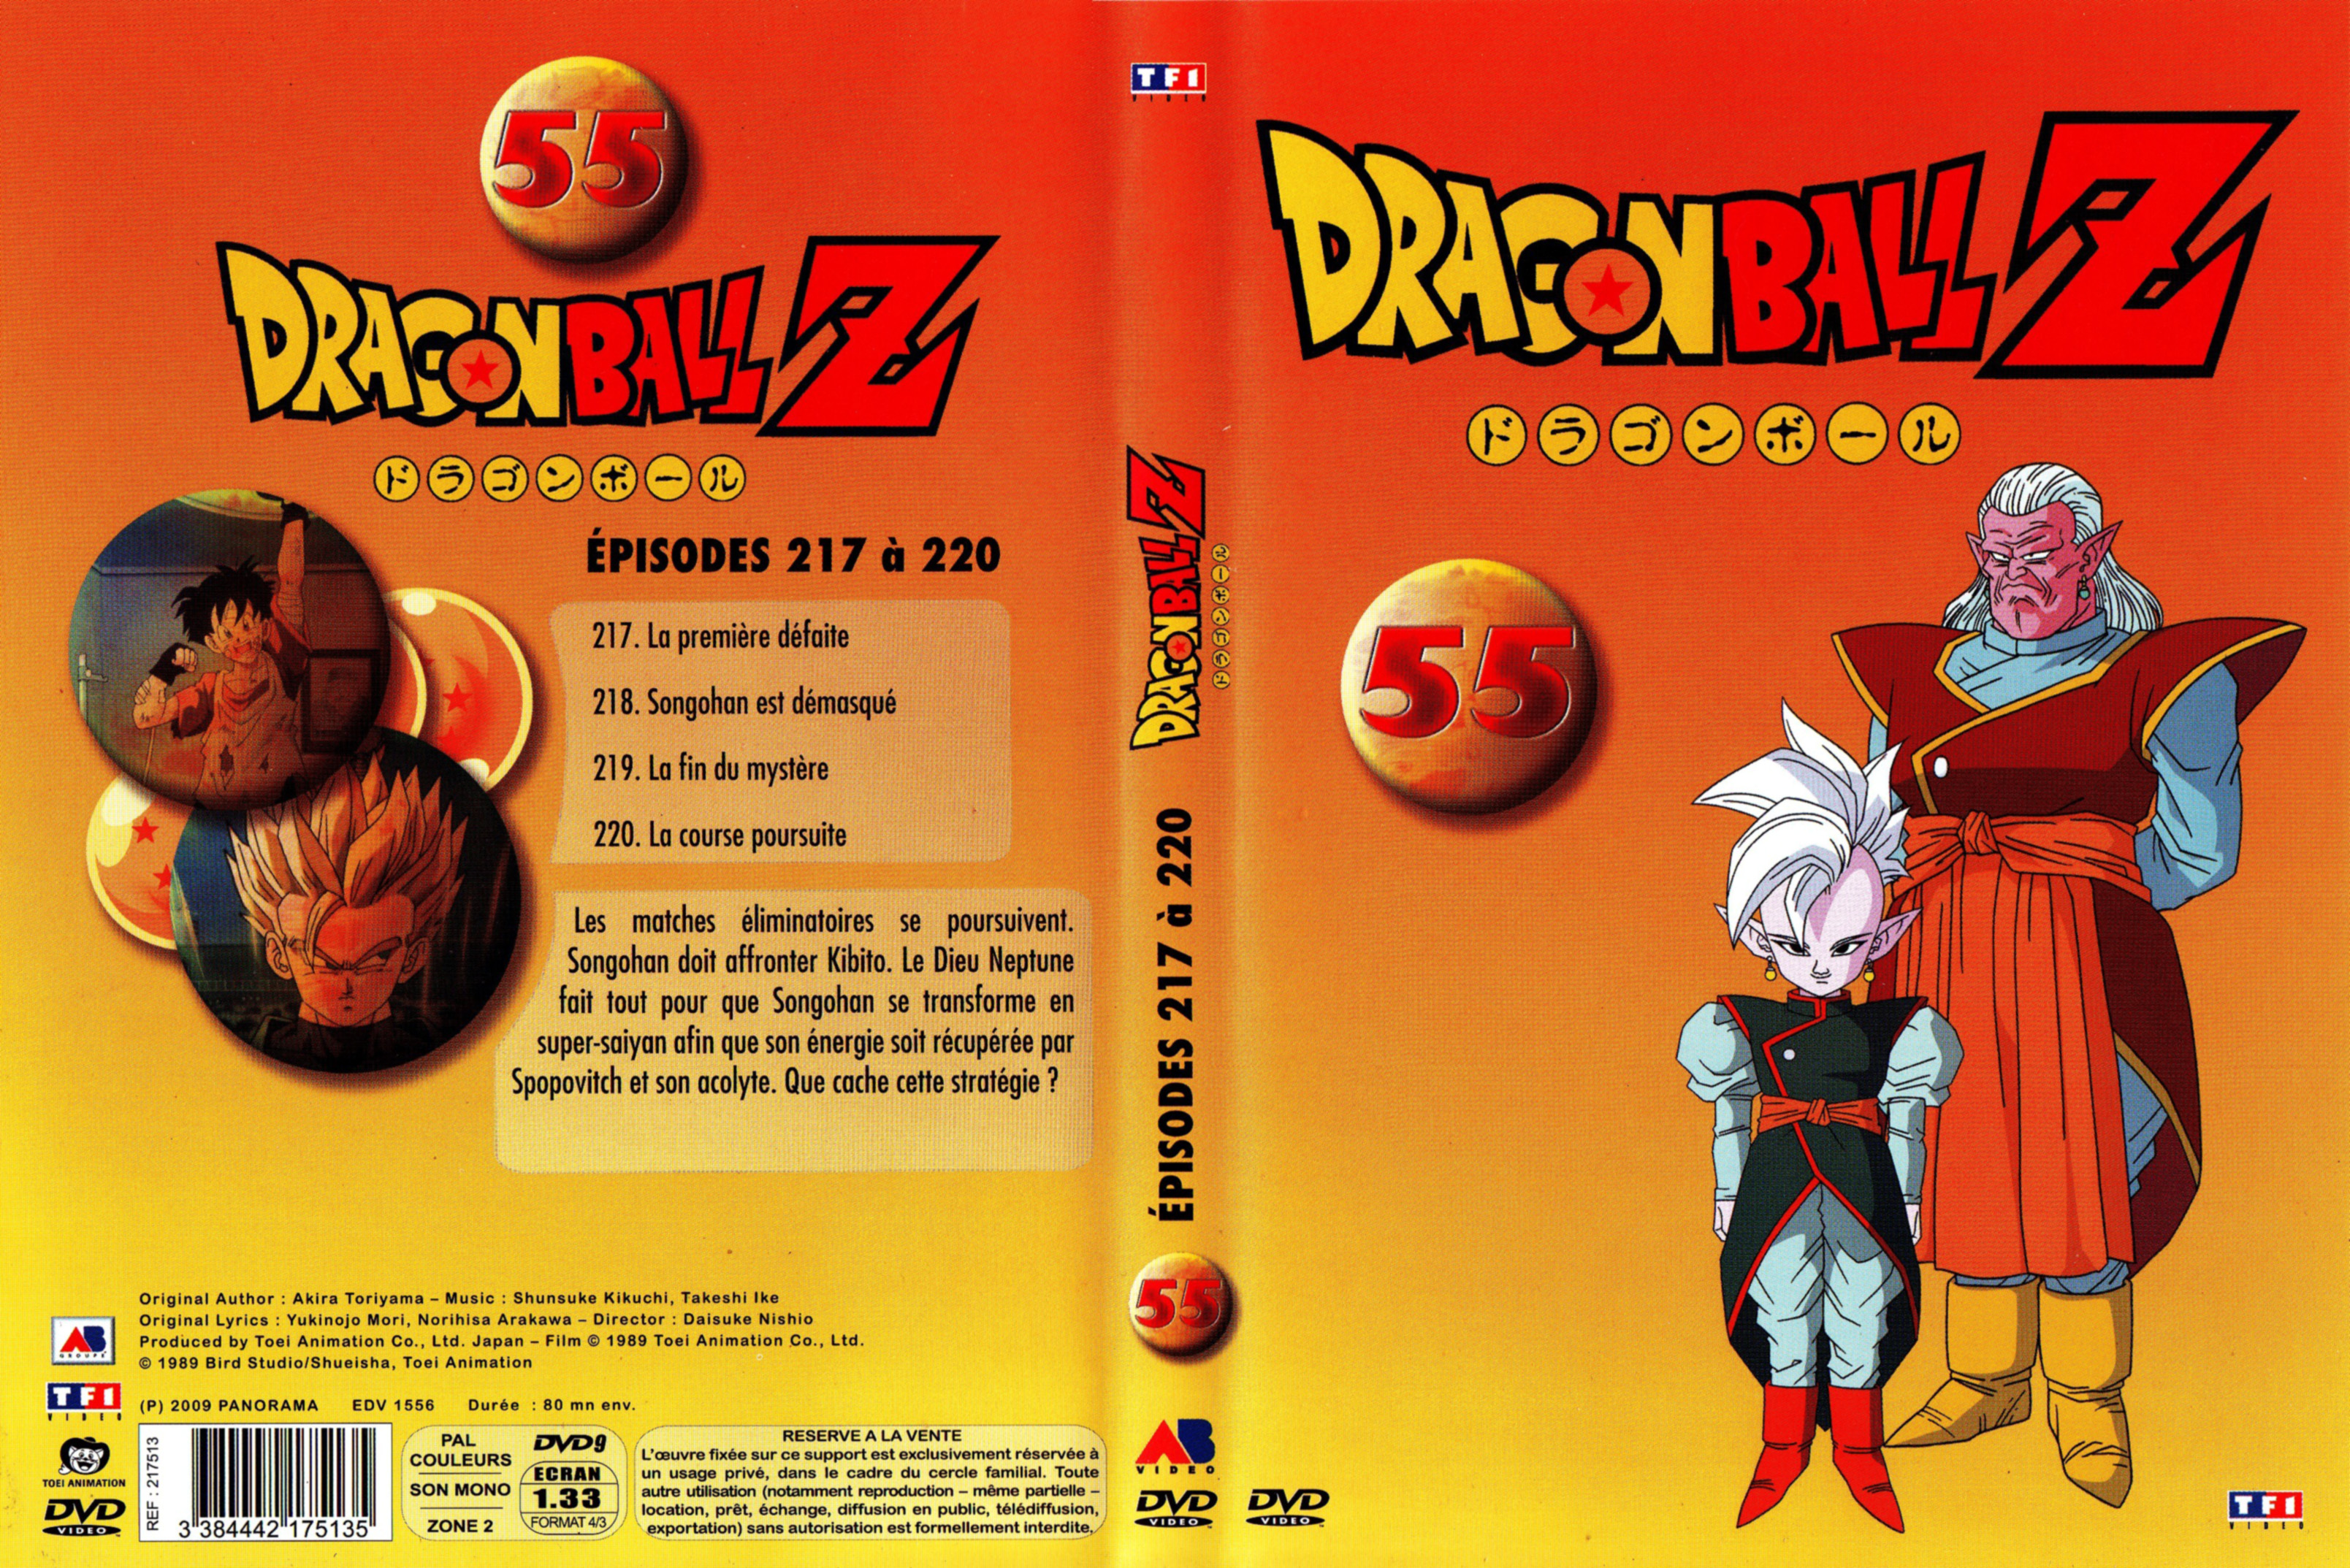 Jaquette DVD Dragon Ball Z vol 55